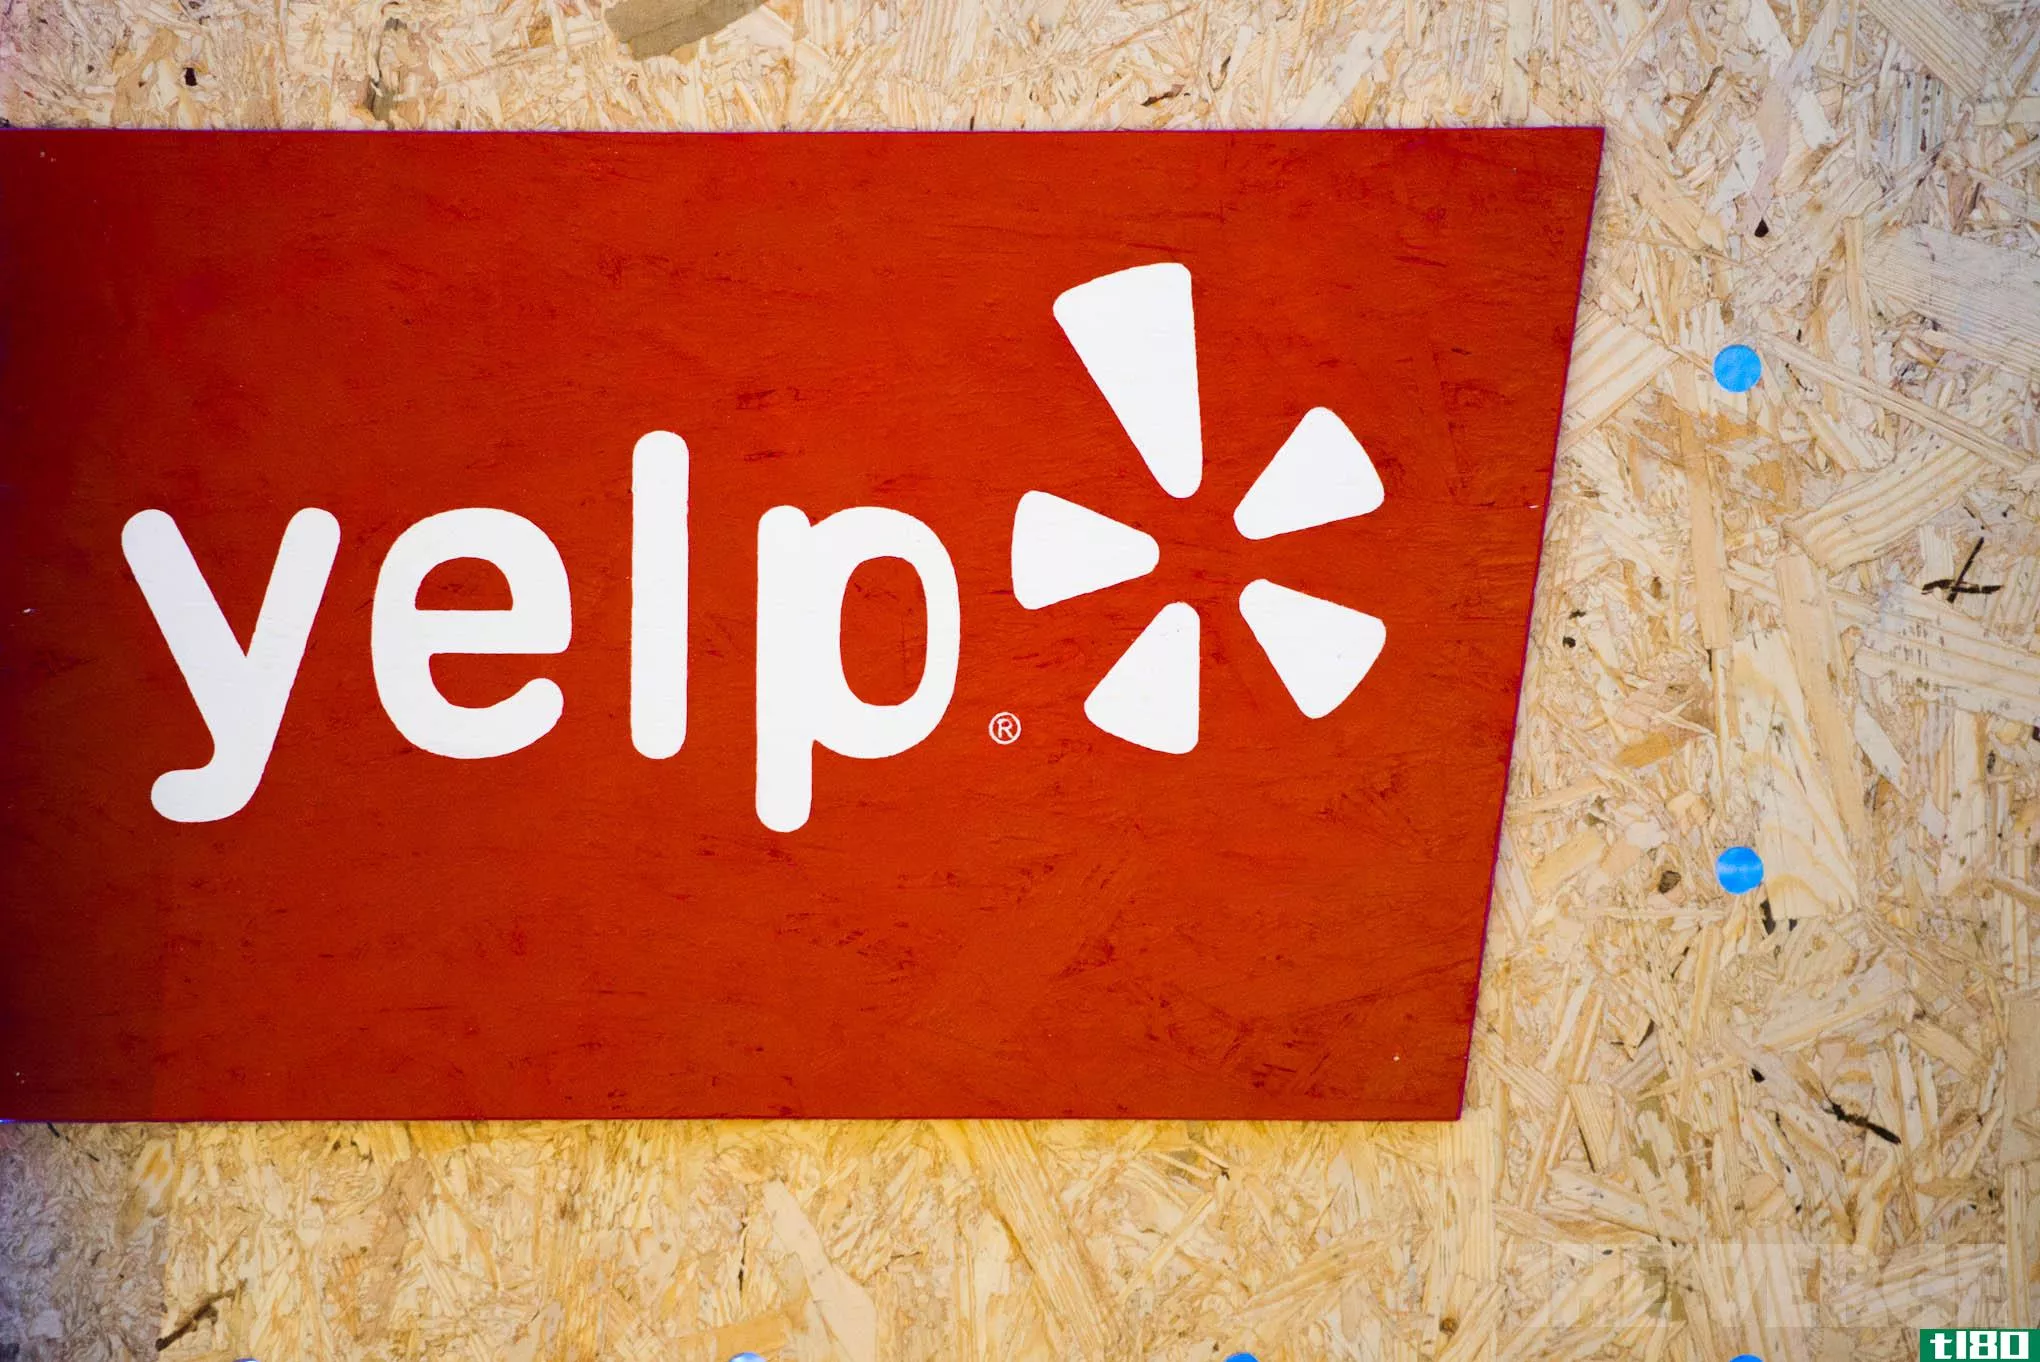 yelp正在起诉一家公司，指控其向餐馆出售虚假的正面评价